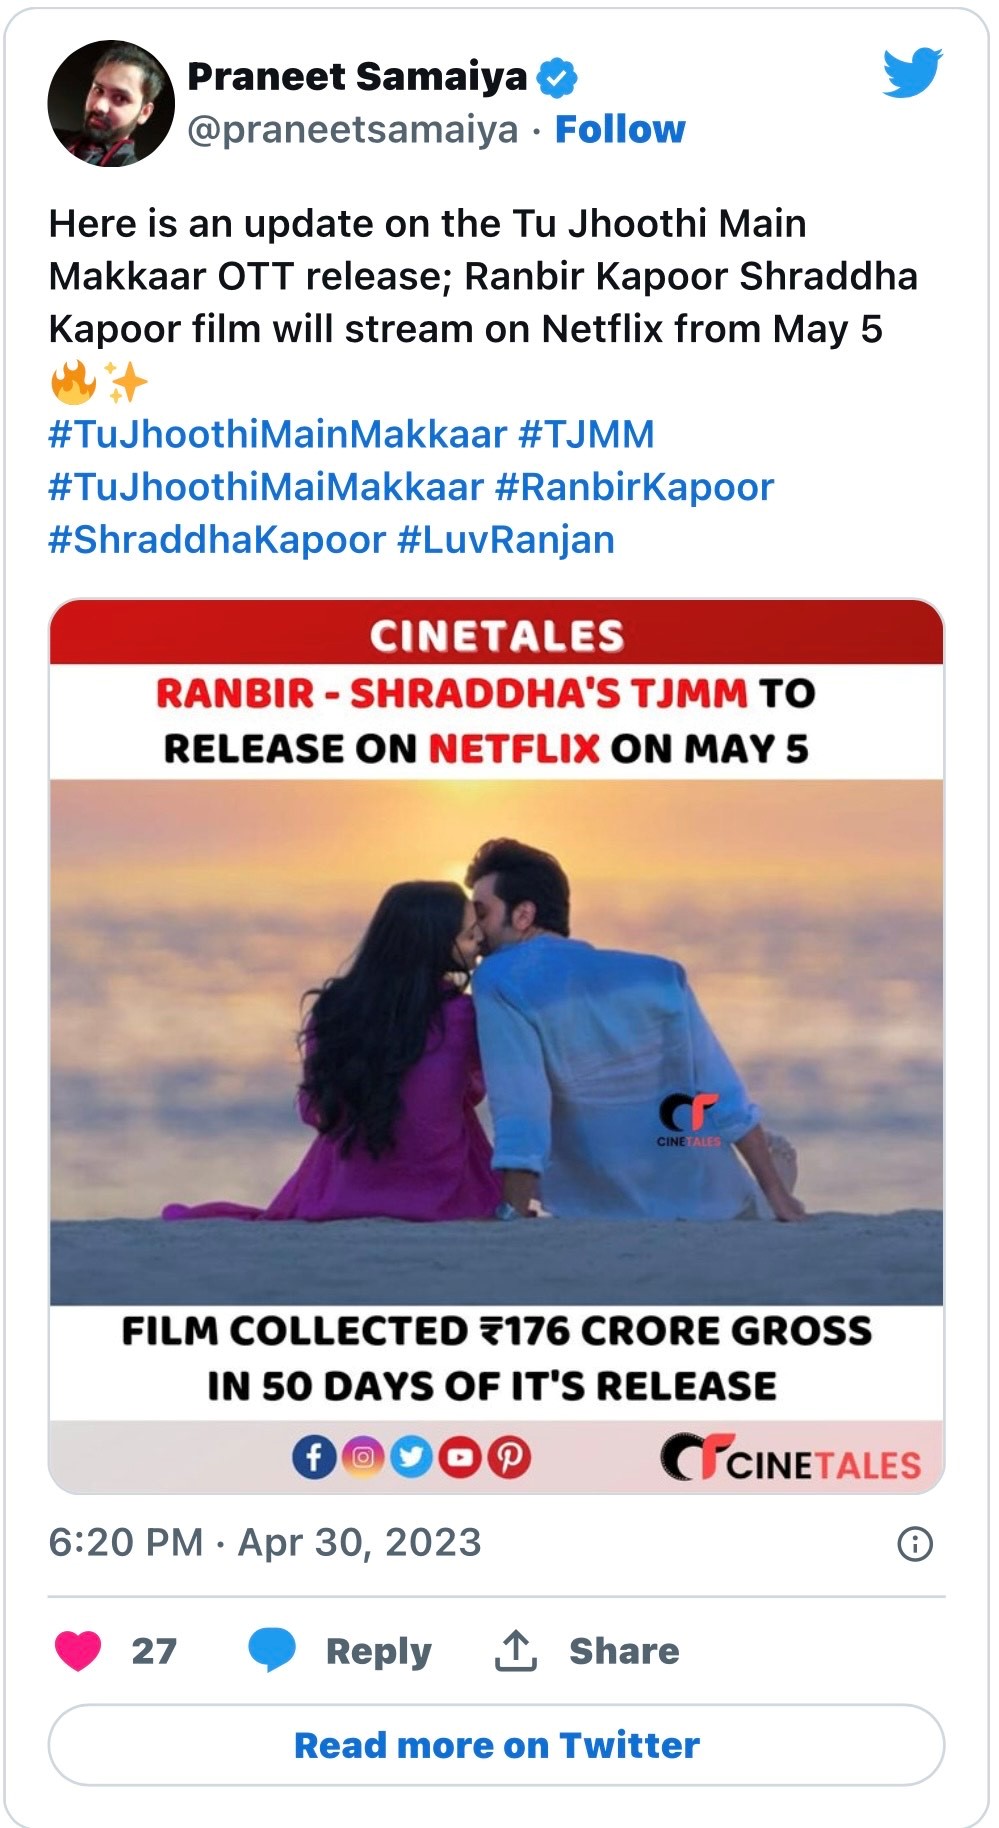 Ranbir Kapoor, Shraddha Kapoor's Tu Jhoothi Main Makkar review in 10 slides